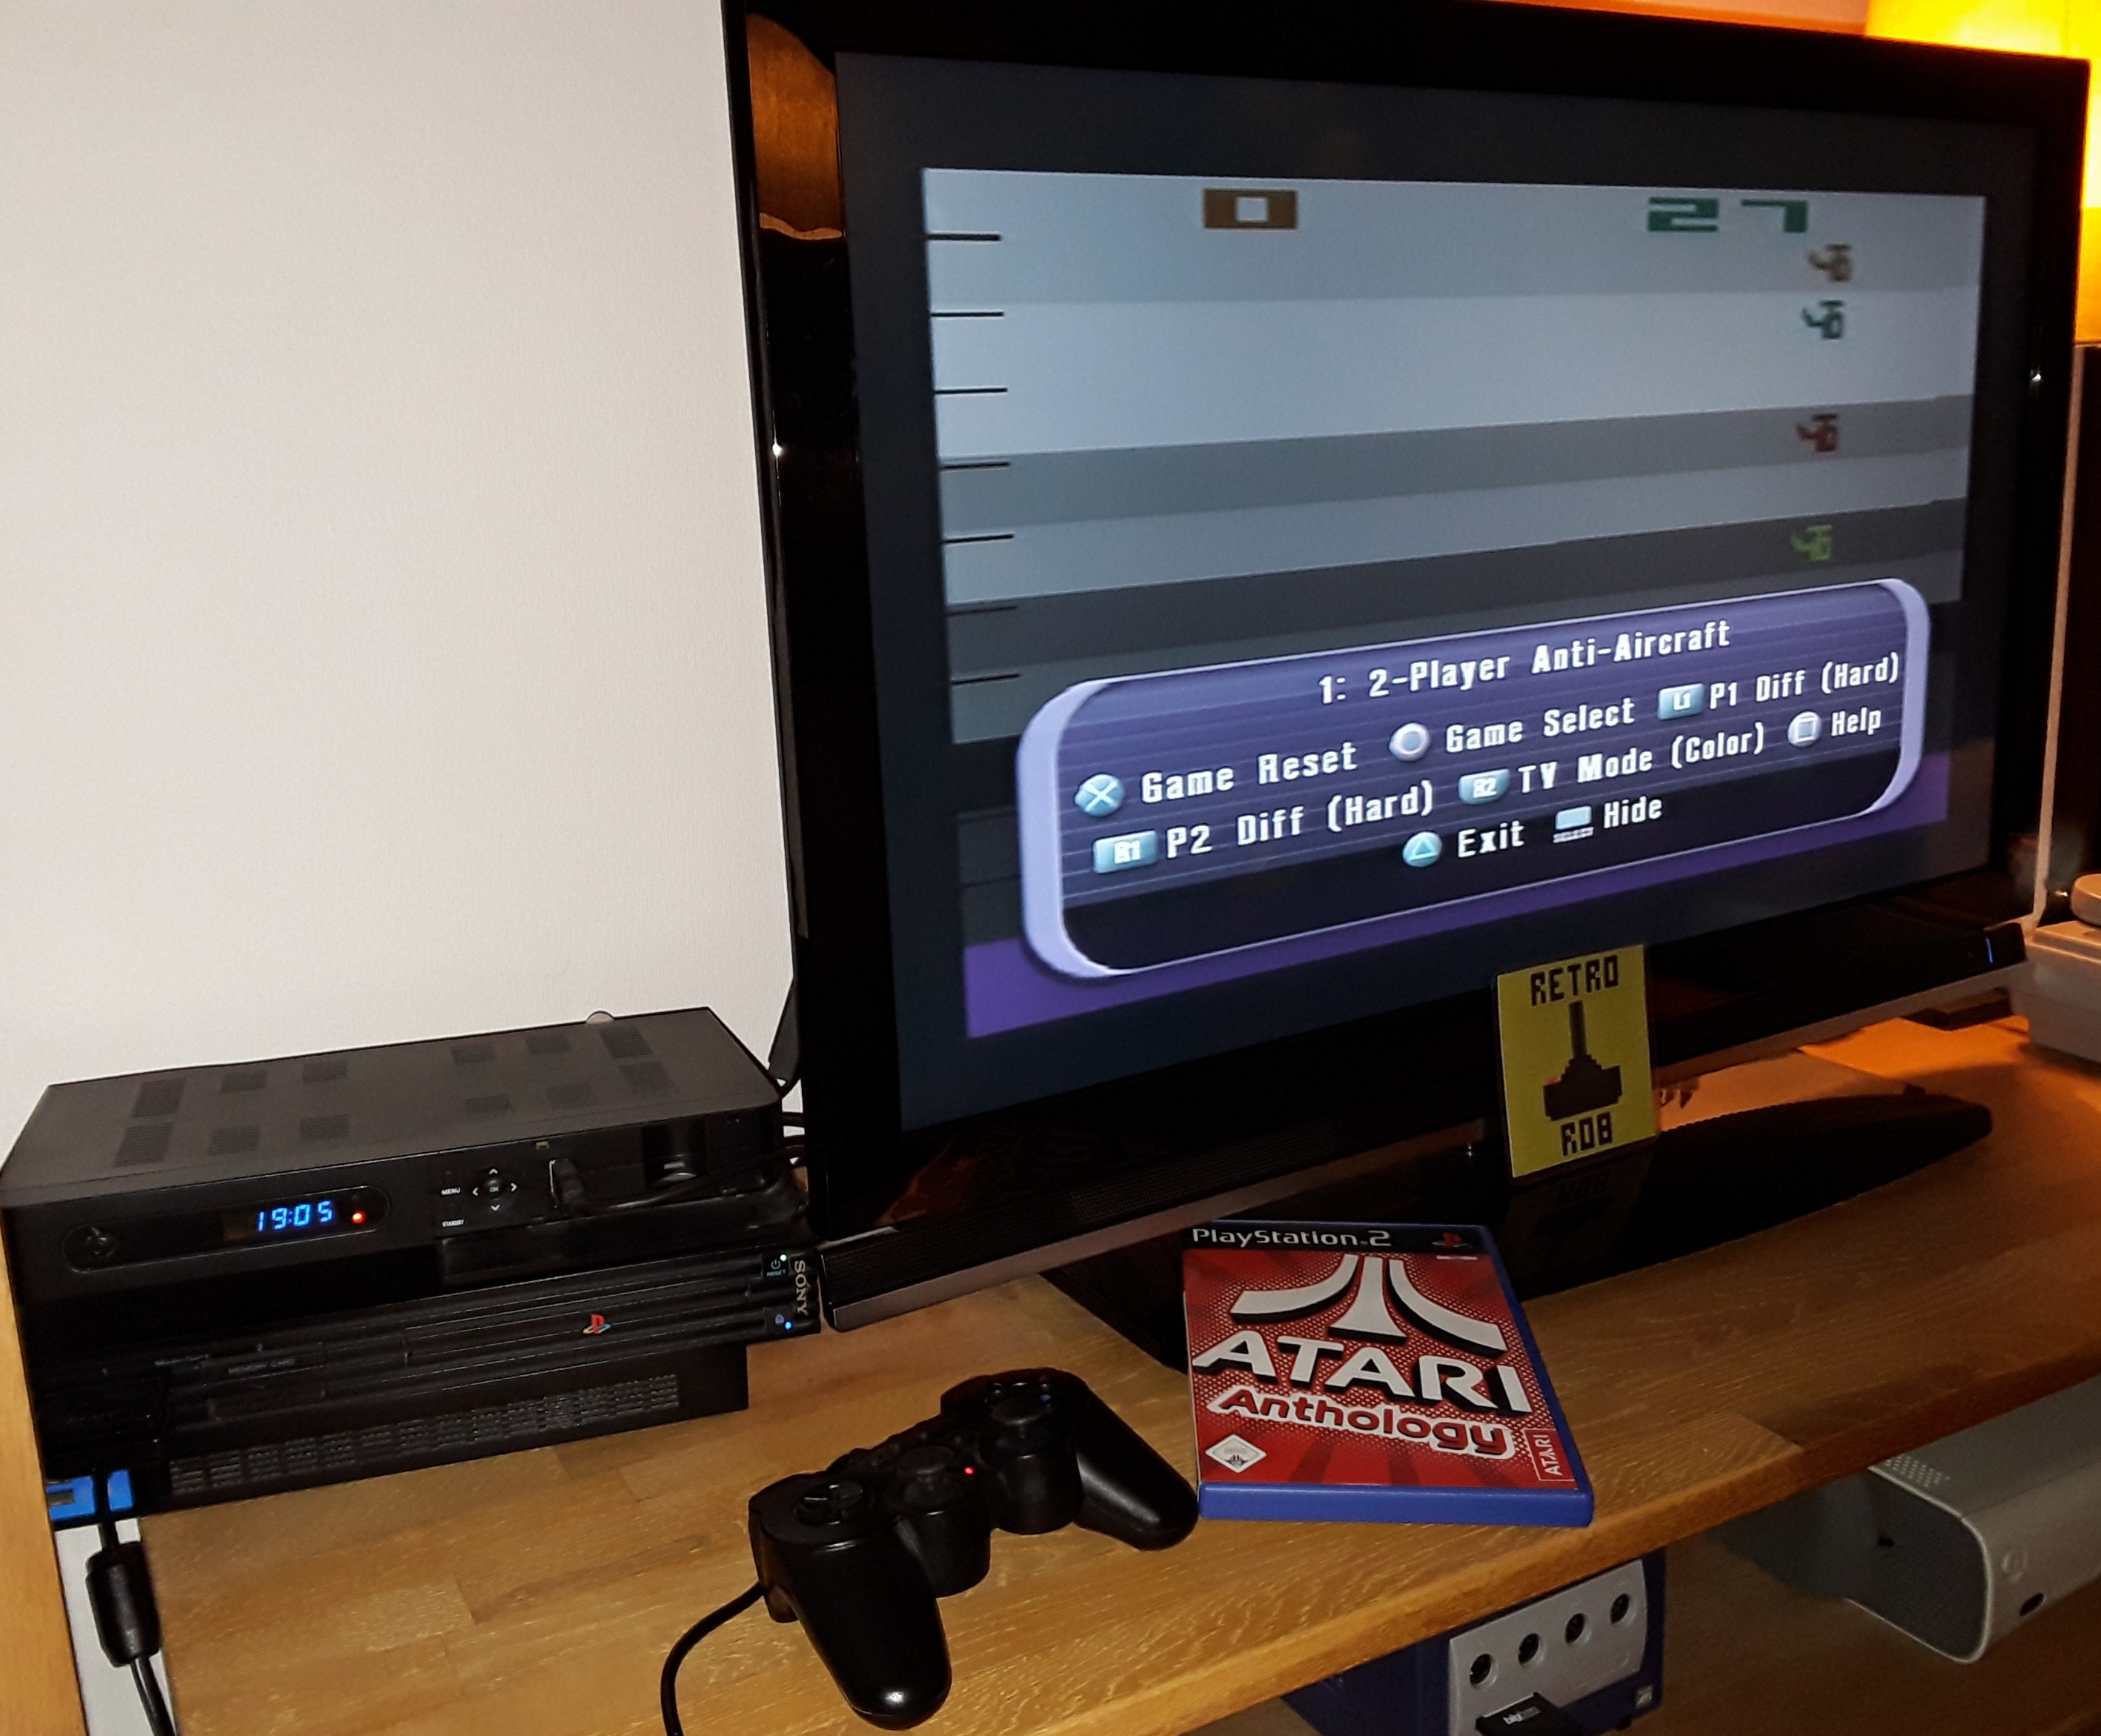 RetroRob: Atari Anthology: Air-Sea Battle [Game 1A] (Playstation 2) 27 points on 2019-02-22 11:08:36